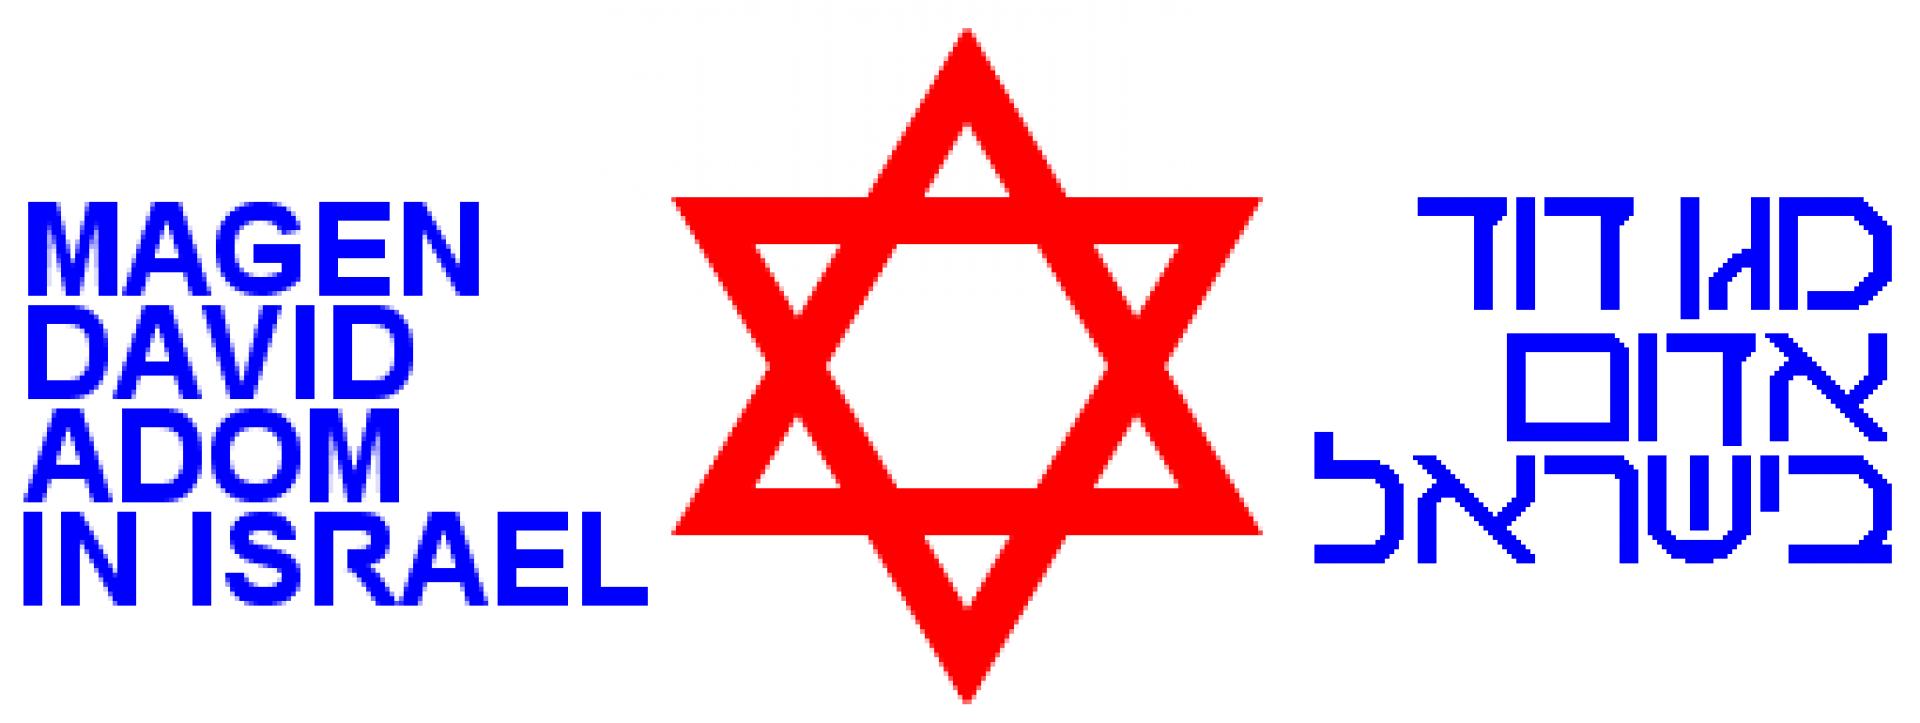 Logo Magen David Adom (Ebraico: מגן דוד אדום, abbr.MDA)